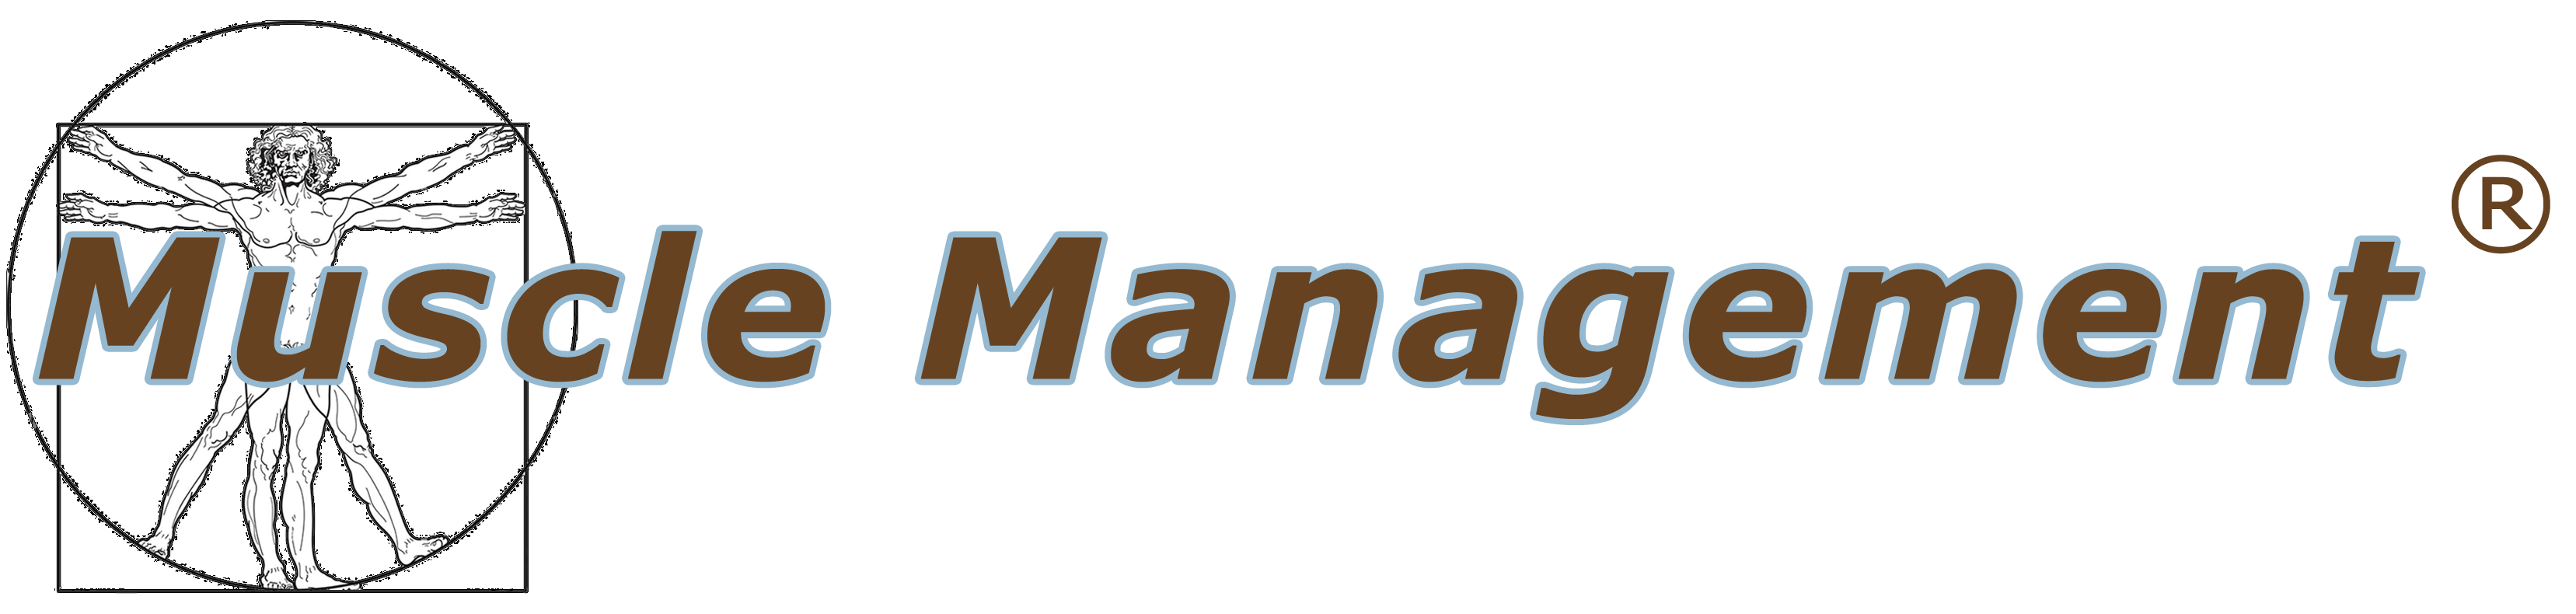 Muscle Management logo